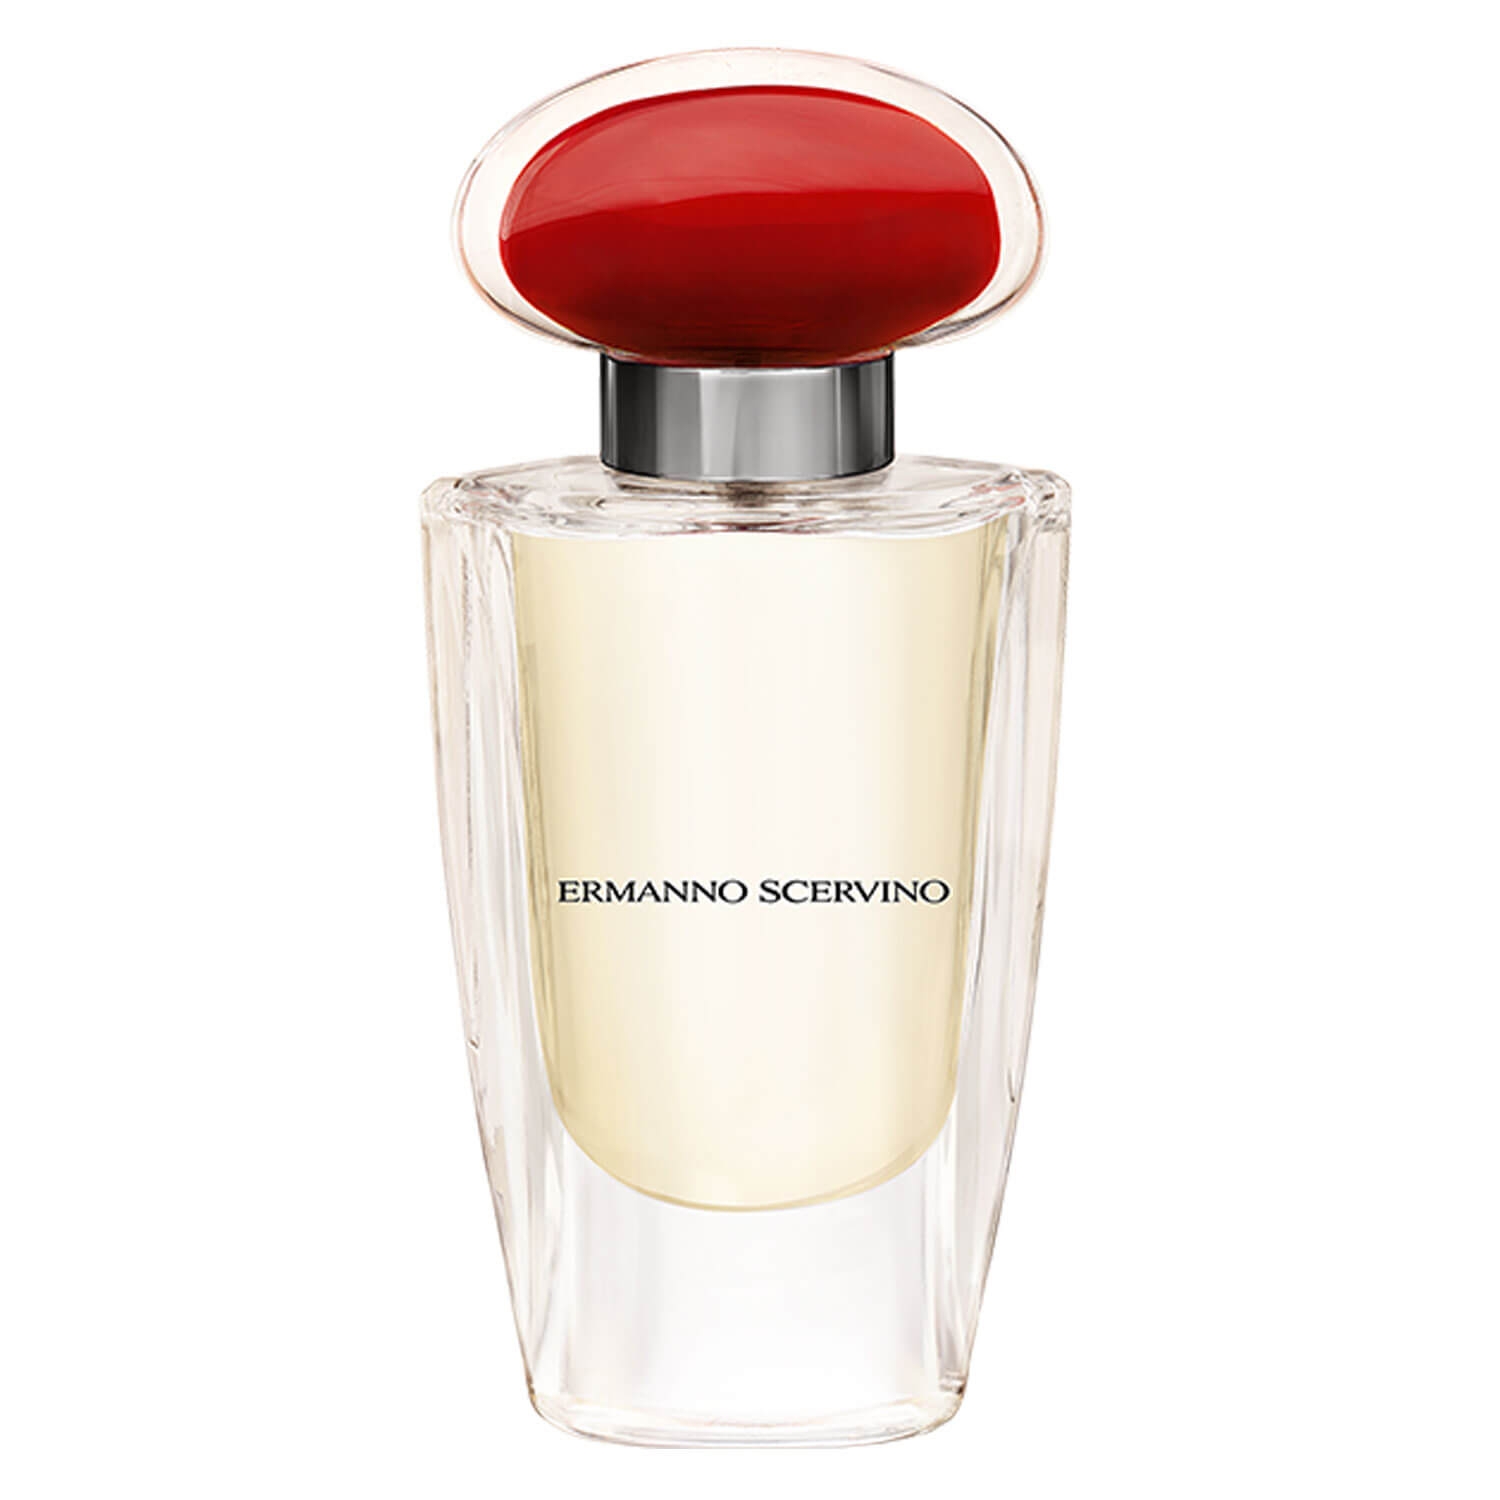 Produktbild von Ermano Scervino - Eau de Parfum